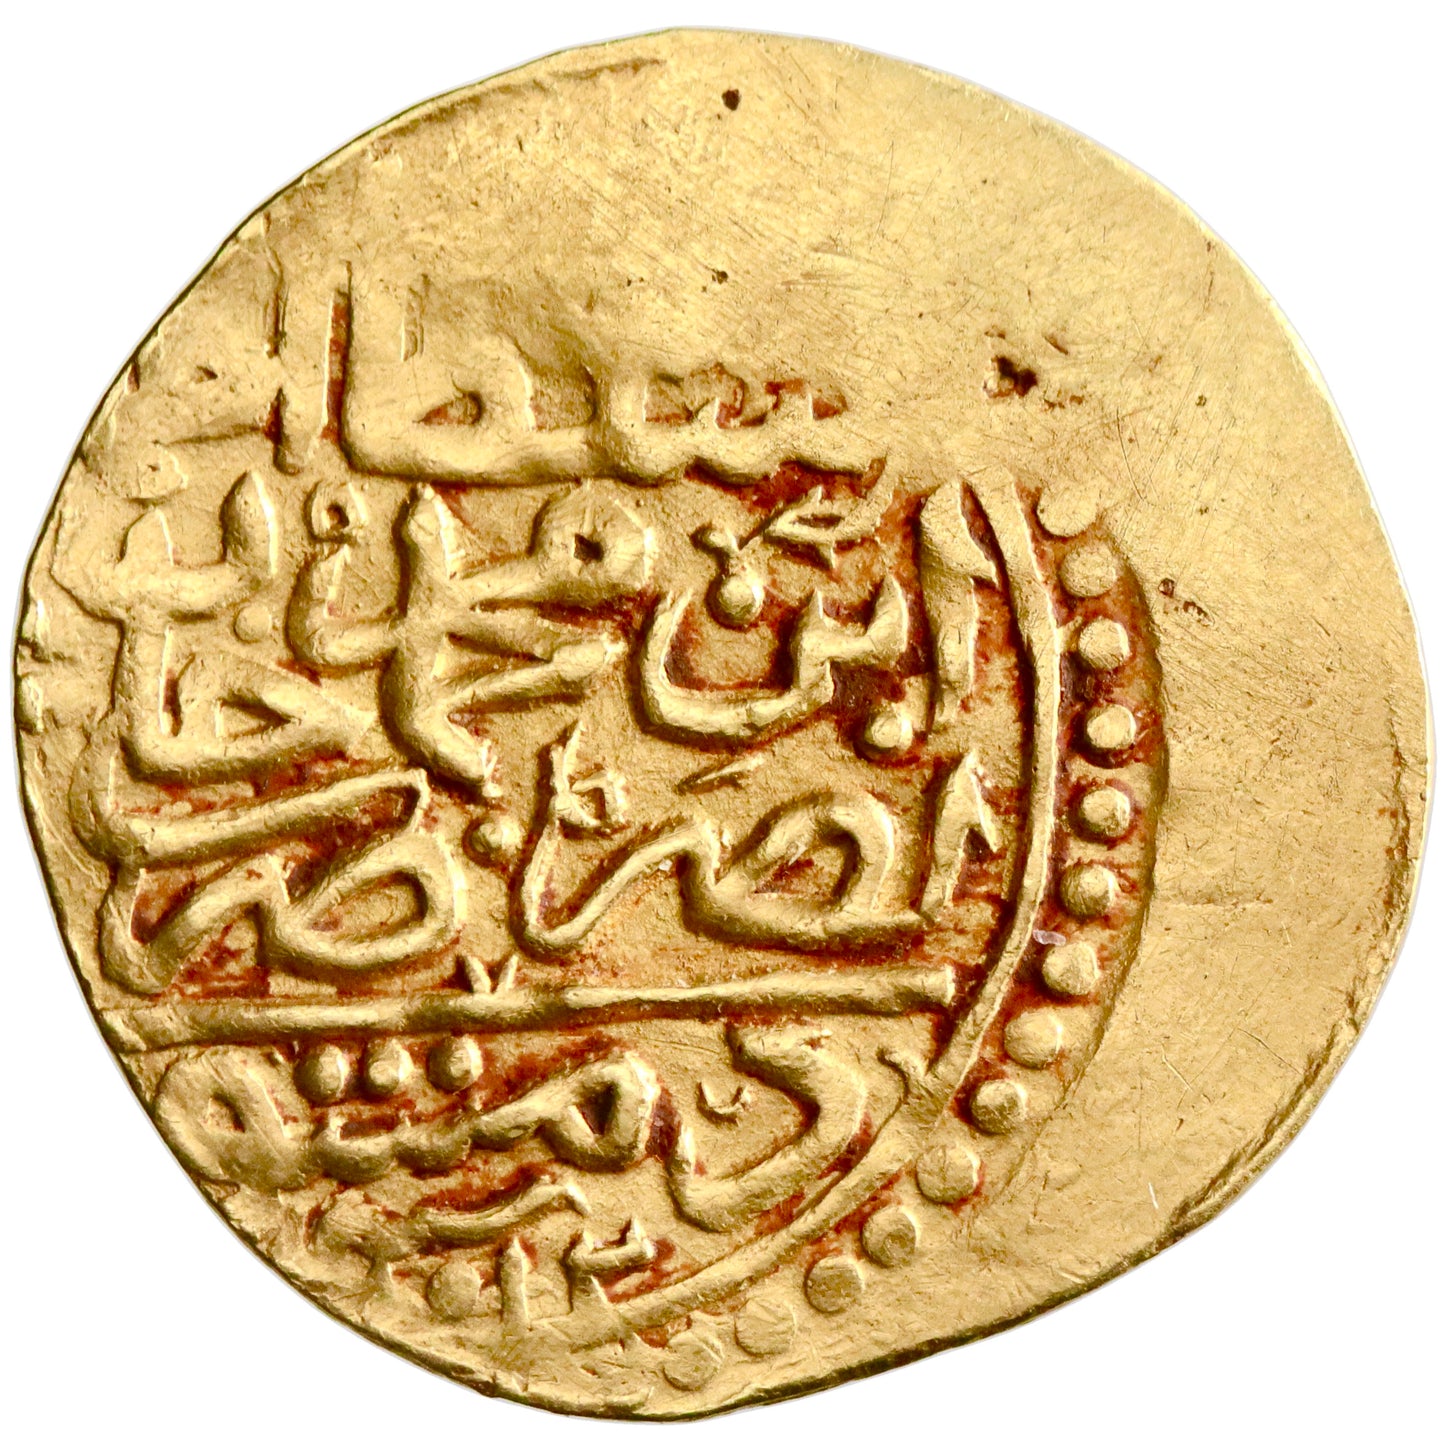 Ottoman, Ahmed I, gold sultani, Dimashq (Damascus) mint, AH 1012